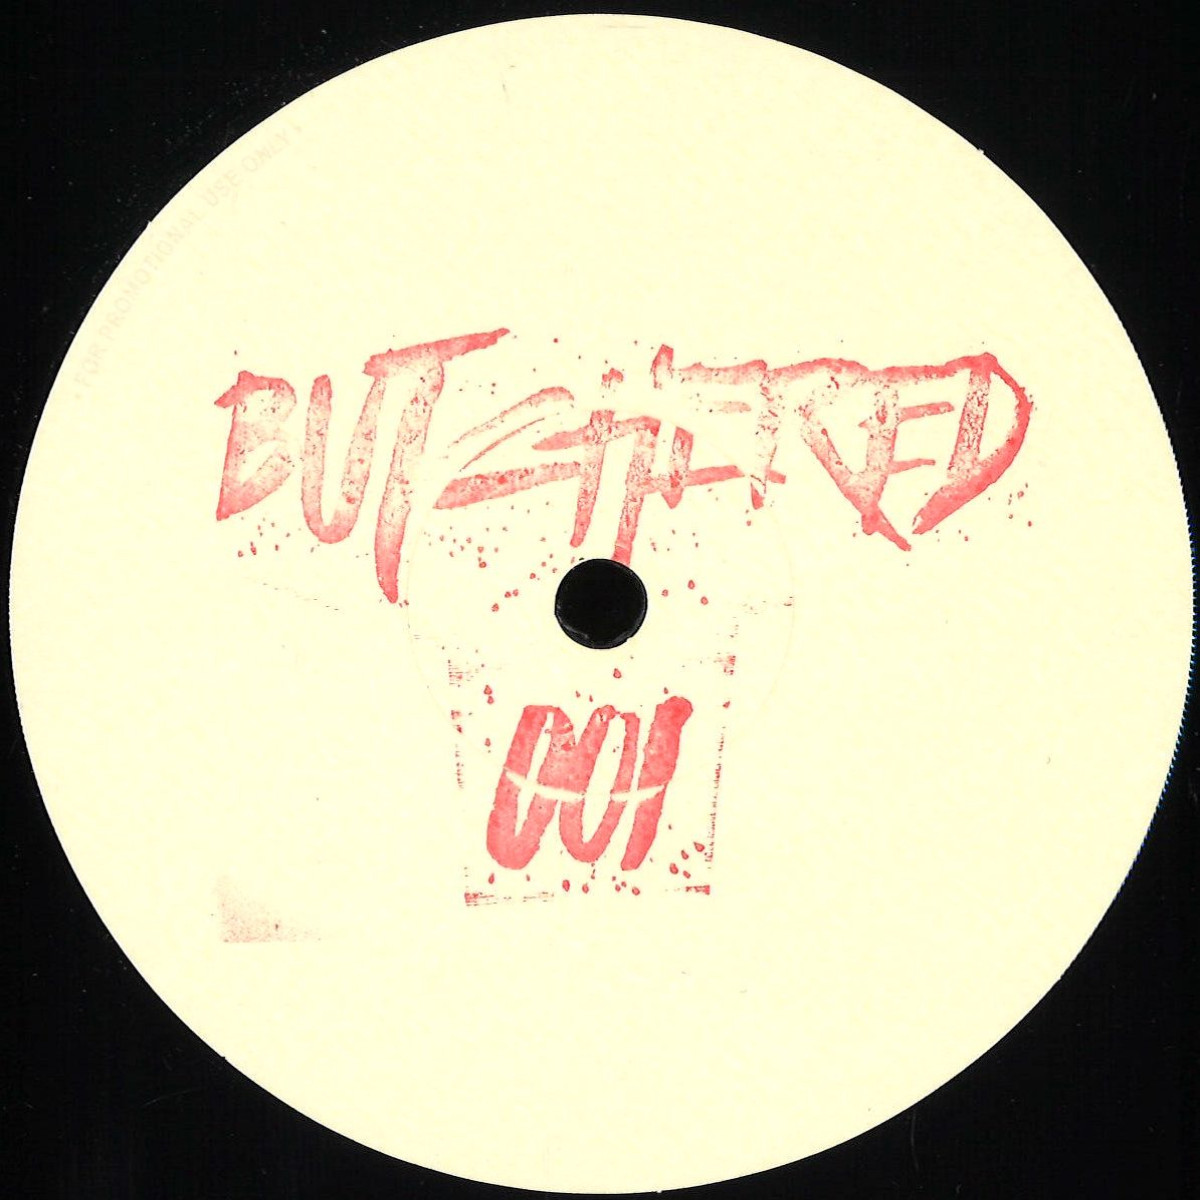 Butchered 01